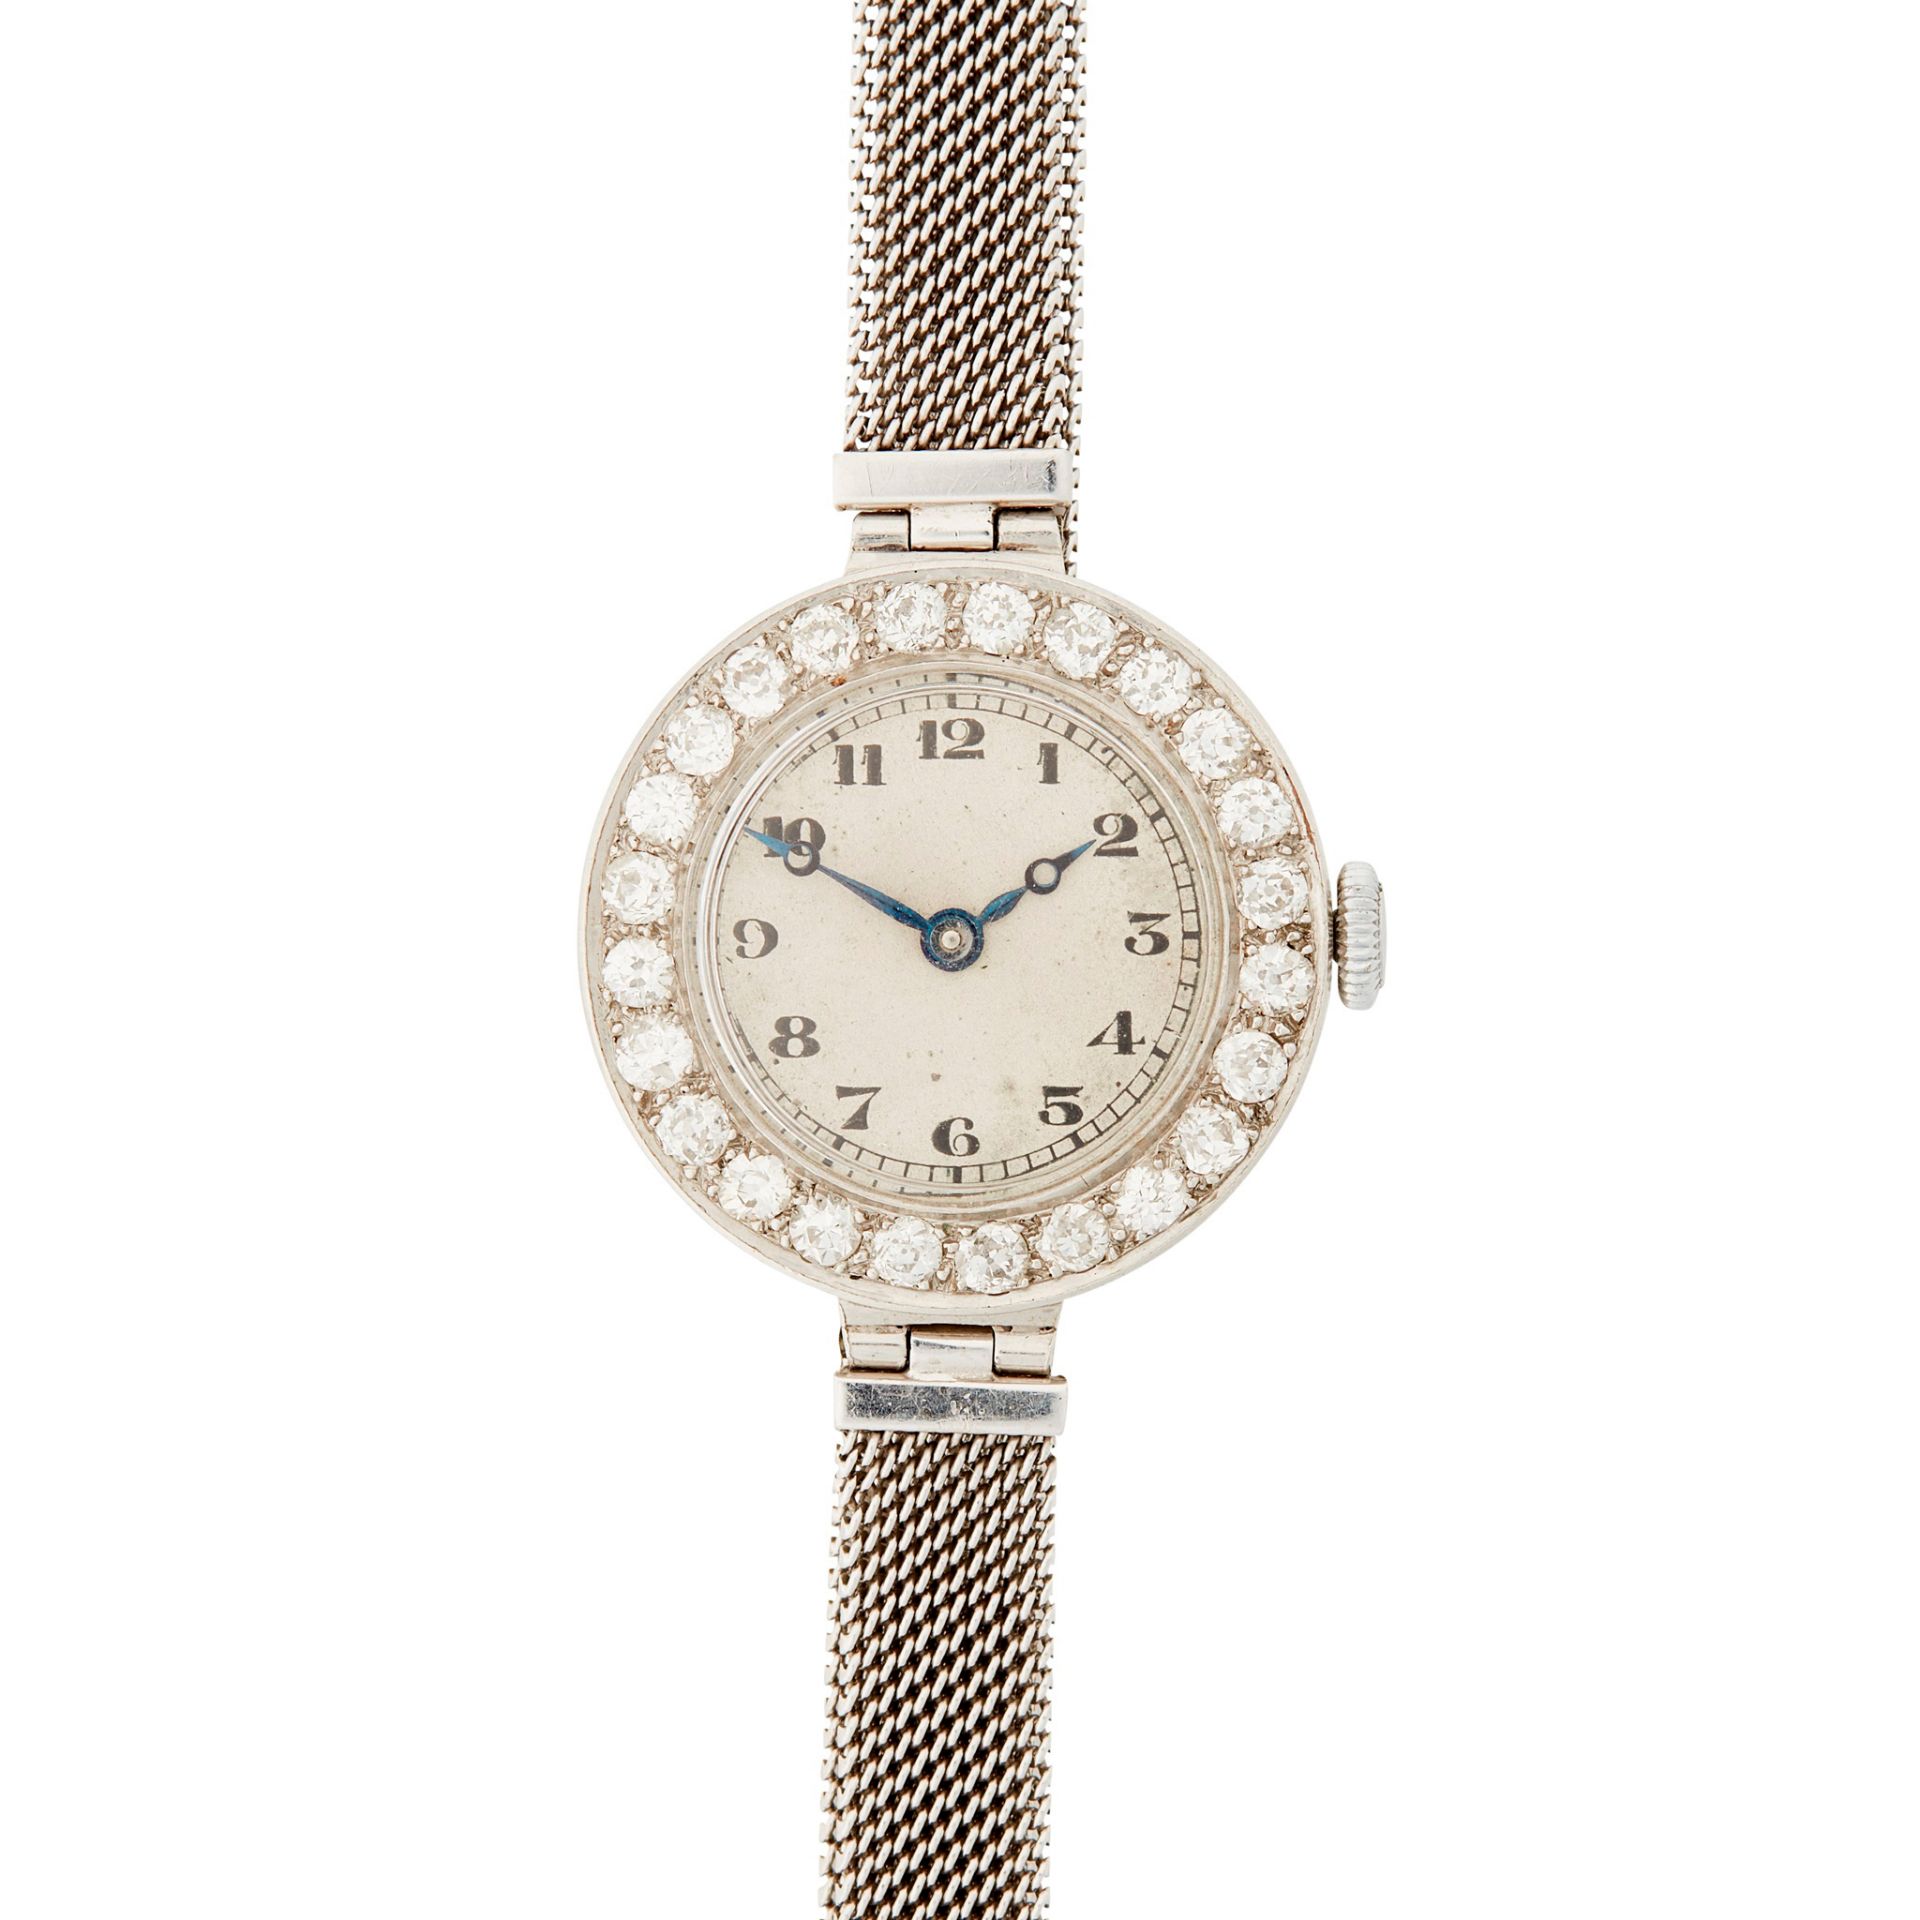 An Art Deco diamond cocktail watch, Latham Watch Co.